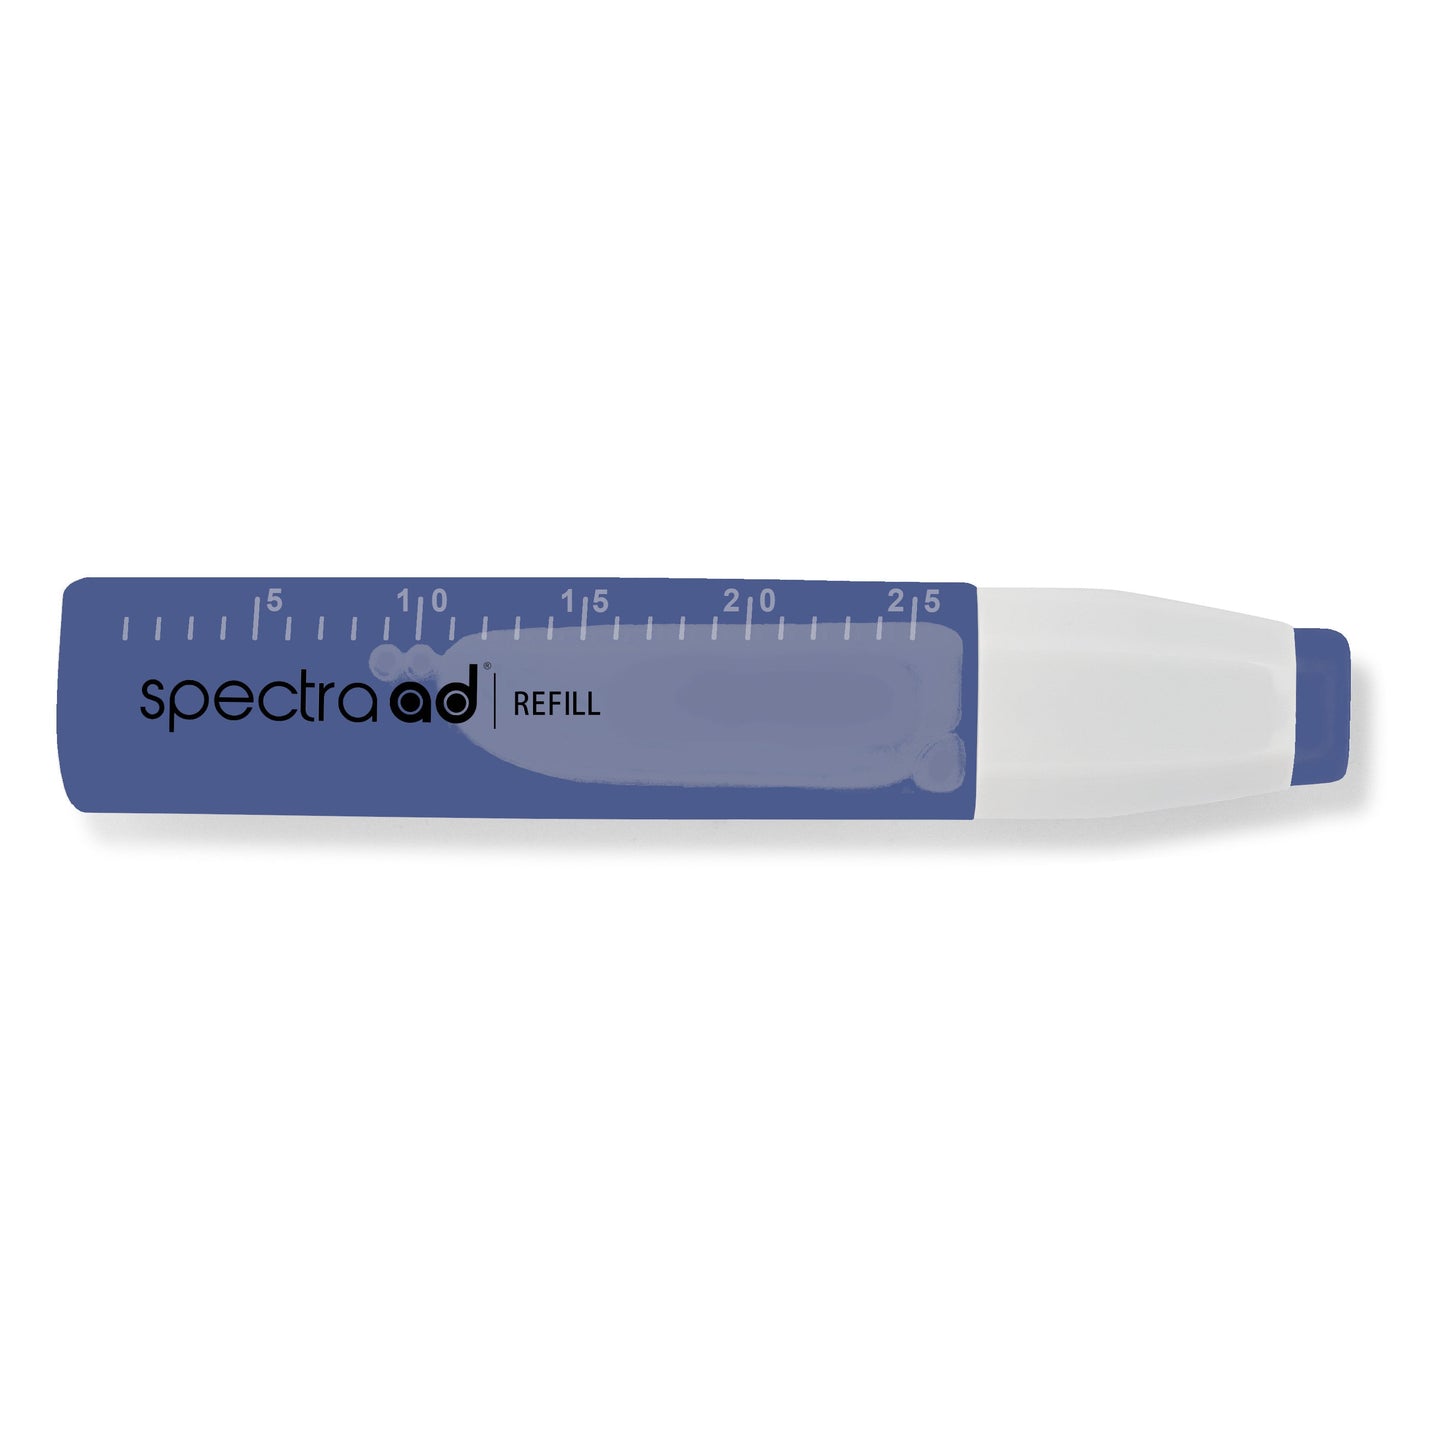 073 - Navy Blue - Spectra AD Refill Bottle